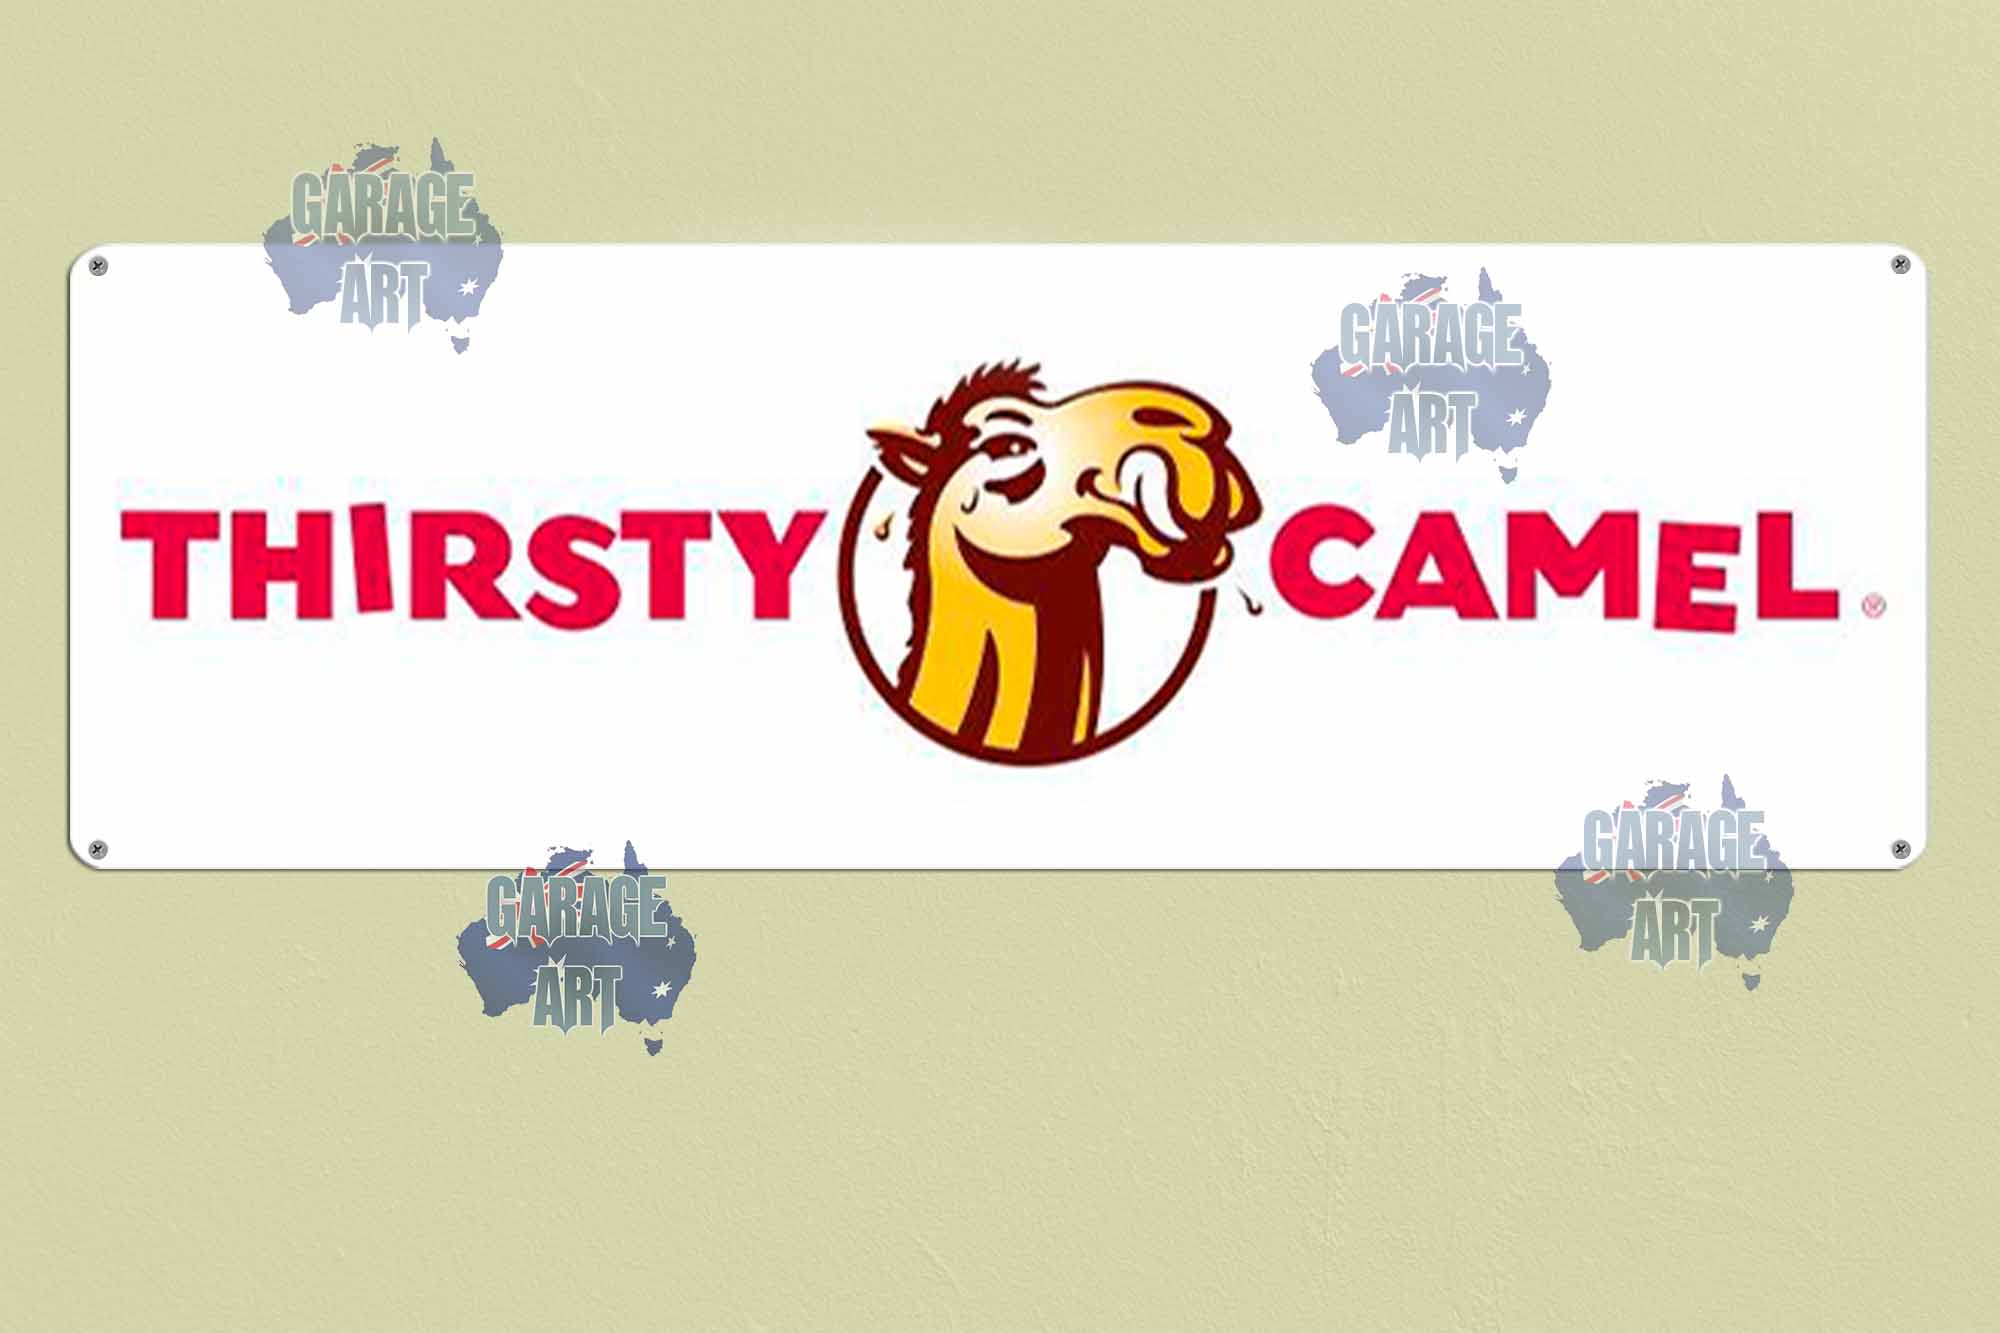 Thisty Camel Logo  750mmx250mm Tin Sign freeshipping - garageartaustralia